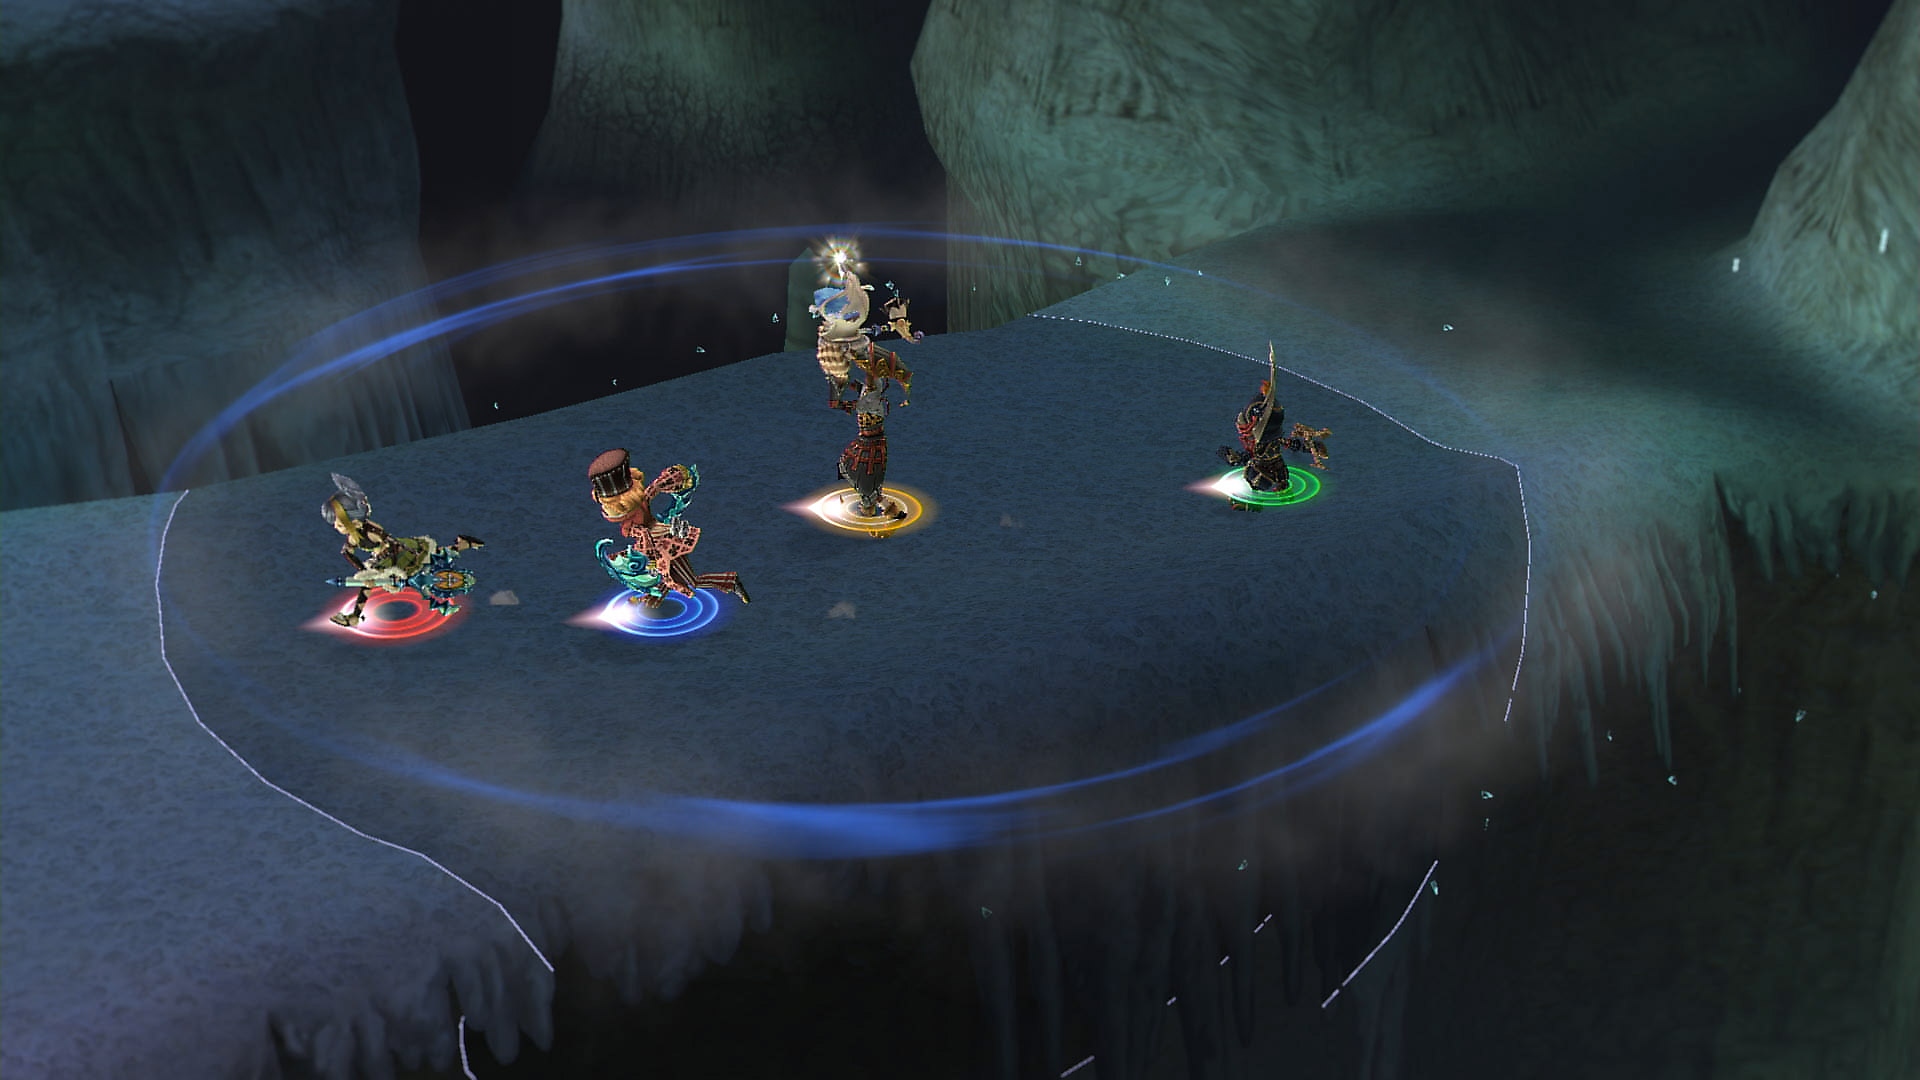 Final Fantasy Crystal Chronicles remastered edition gameplay screenshot